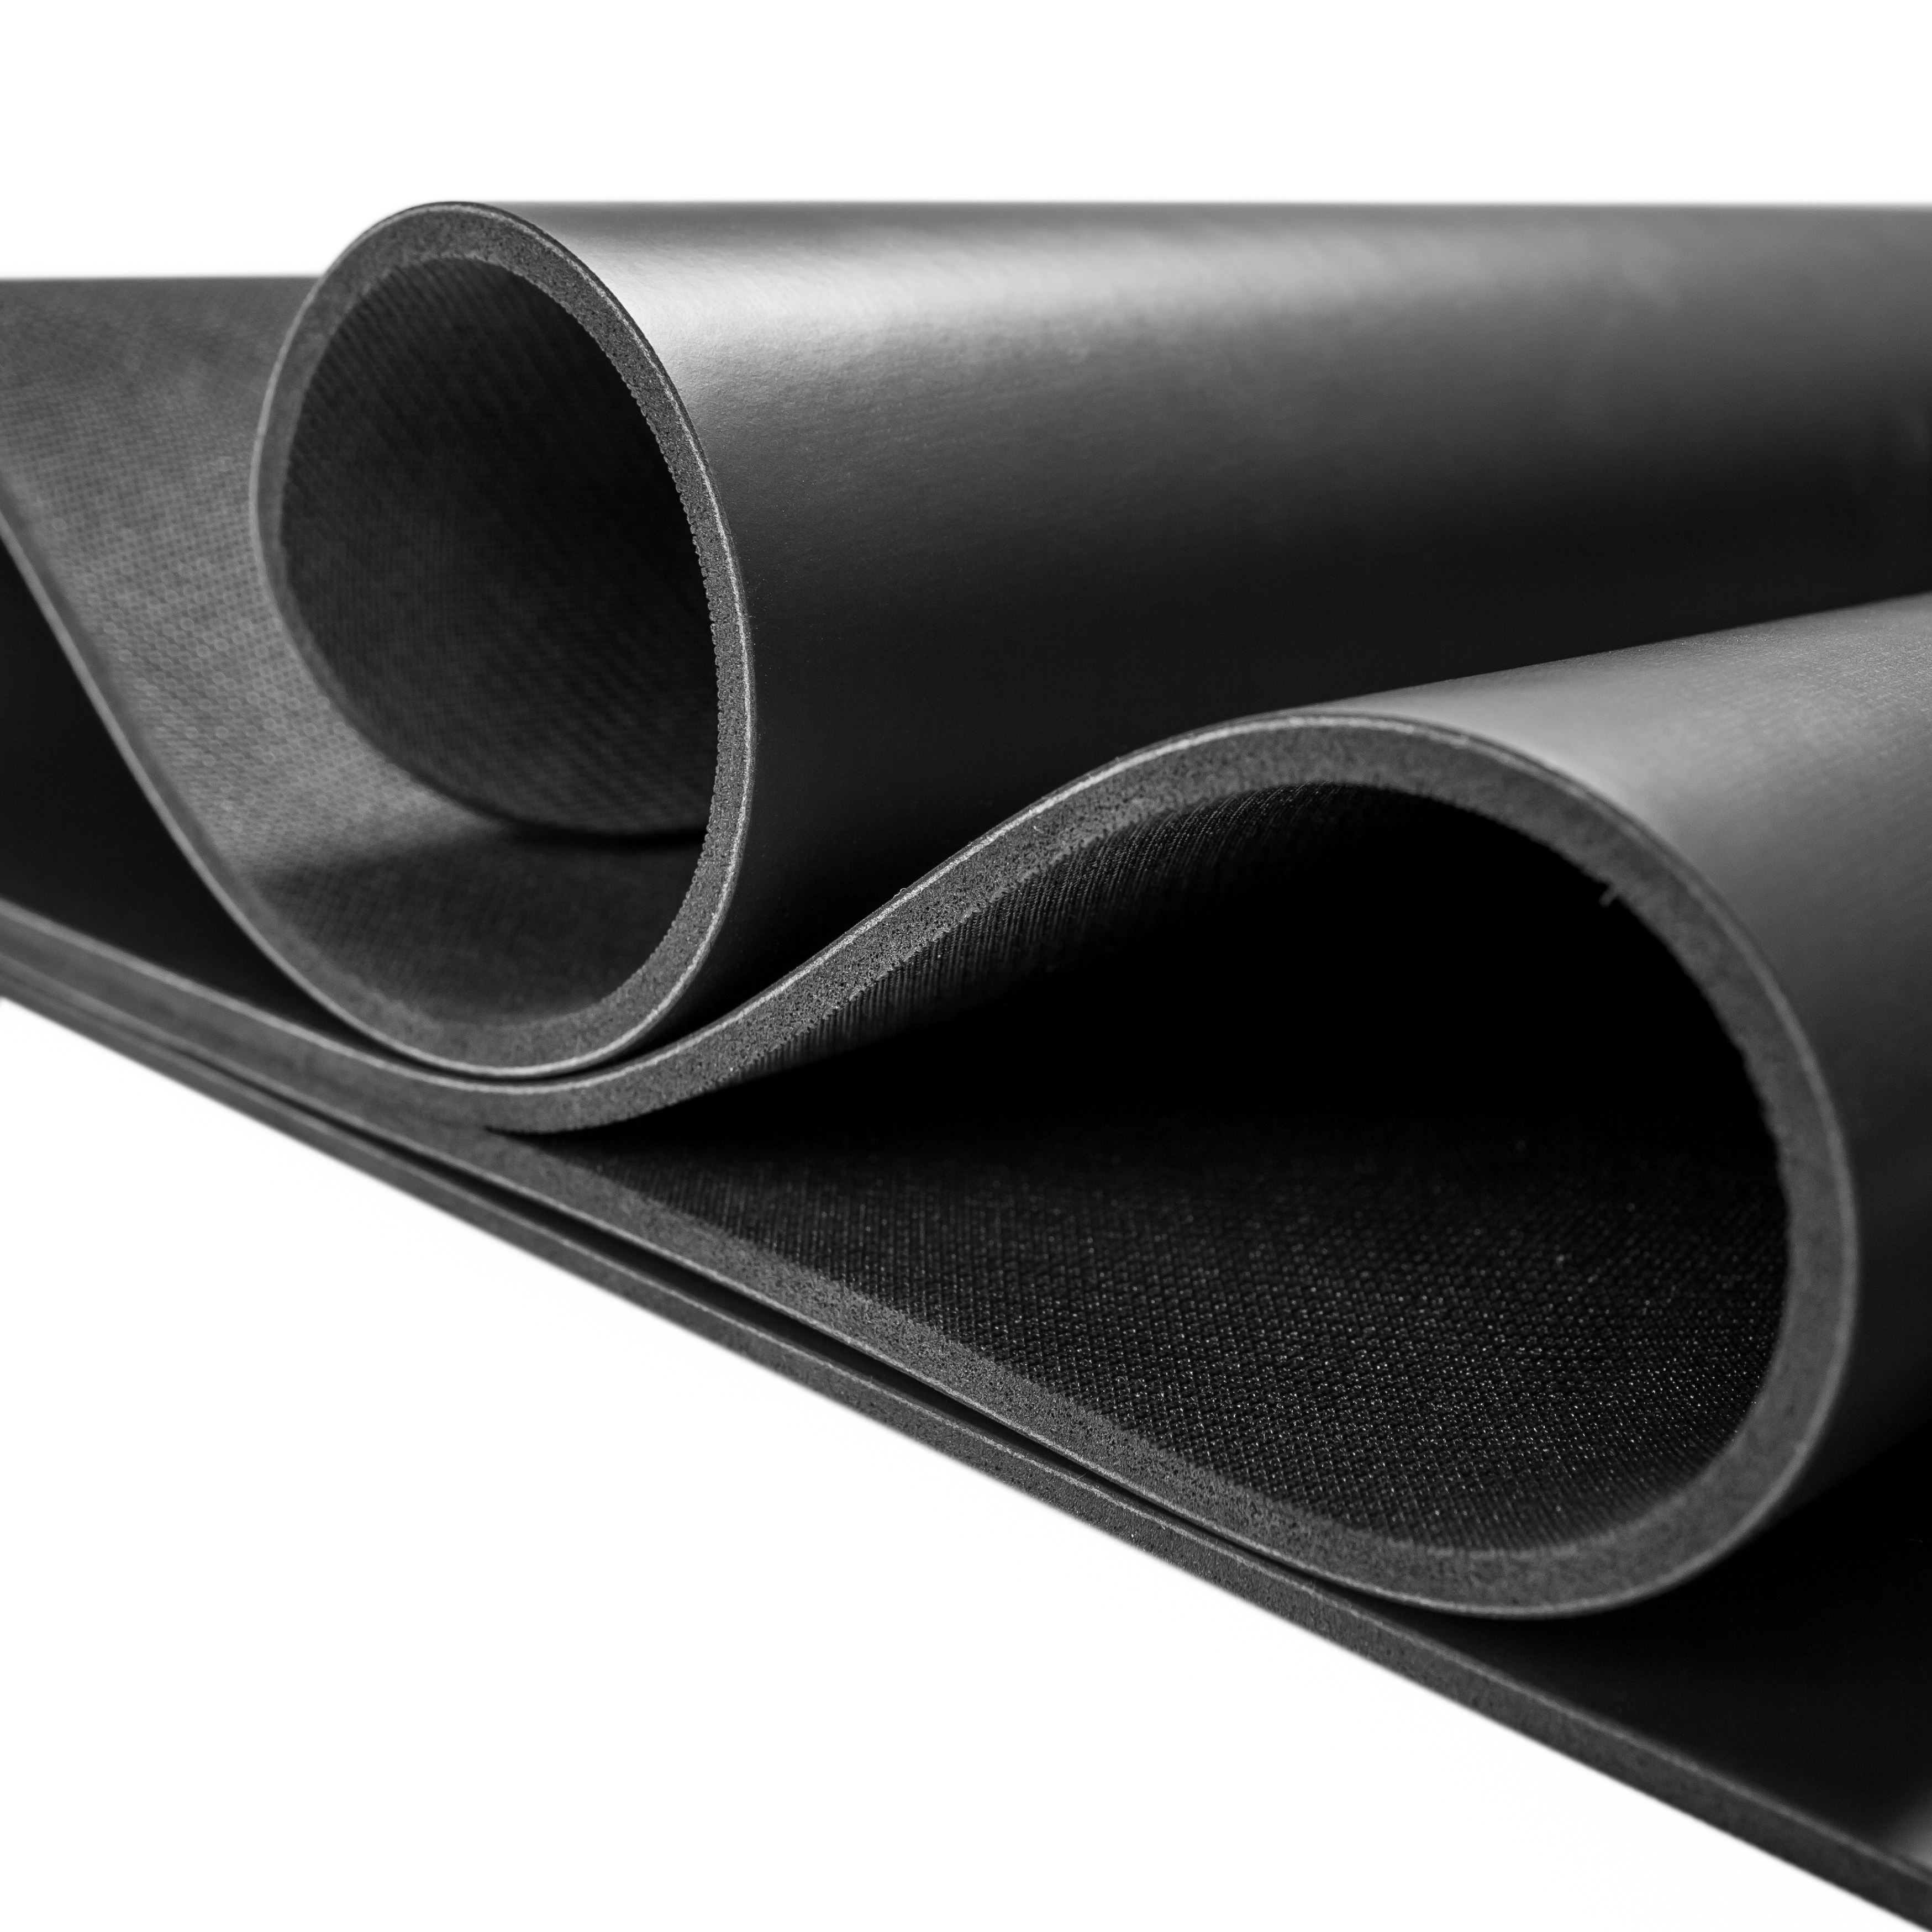 Mocana nimbus black yoga mat with alignment and extra grip